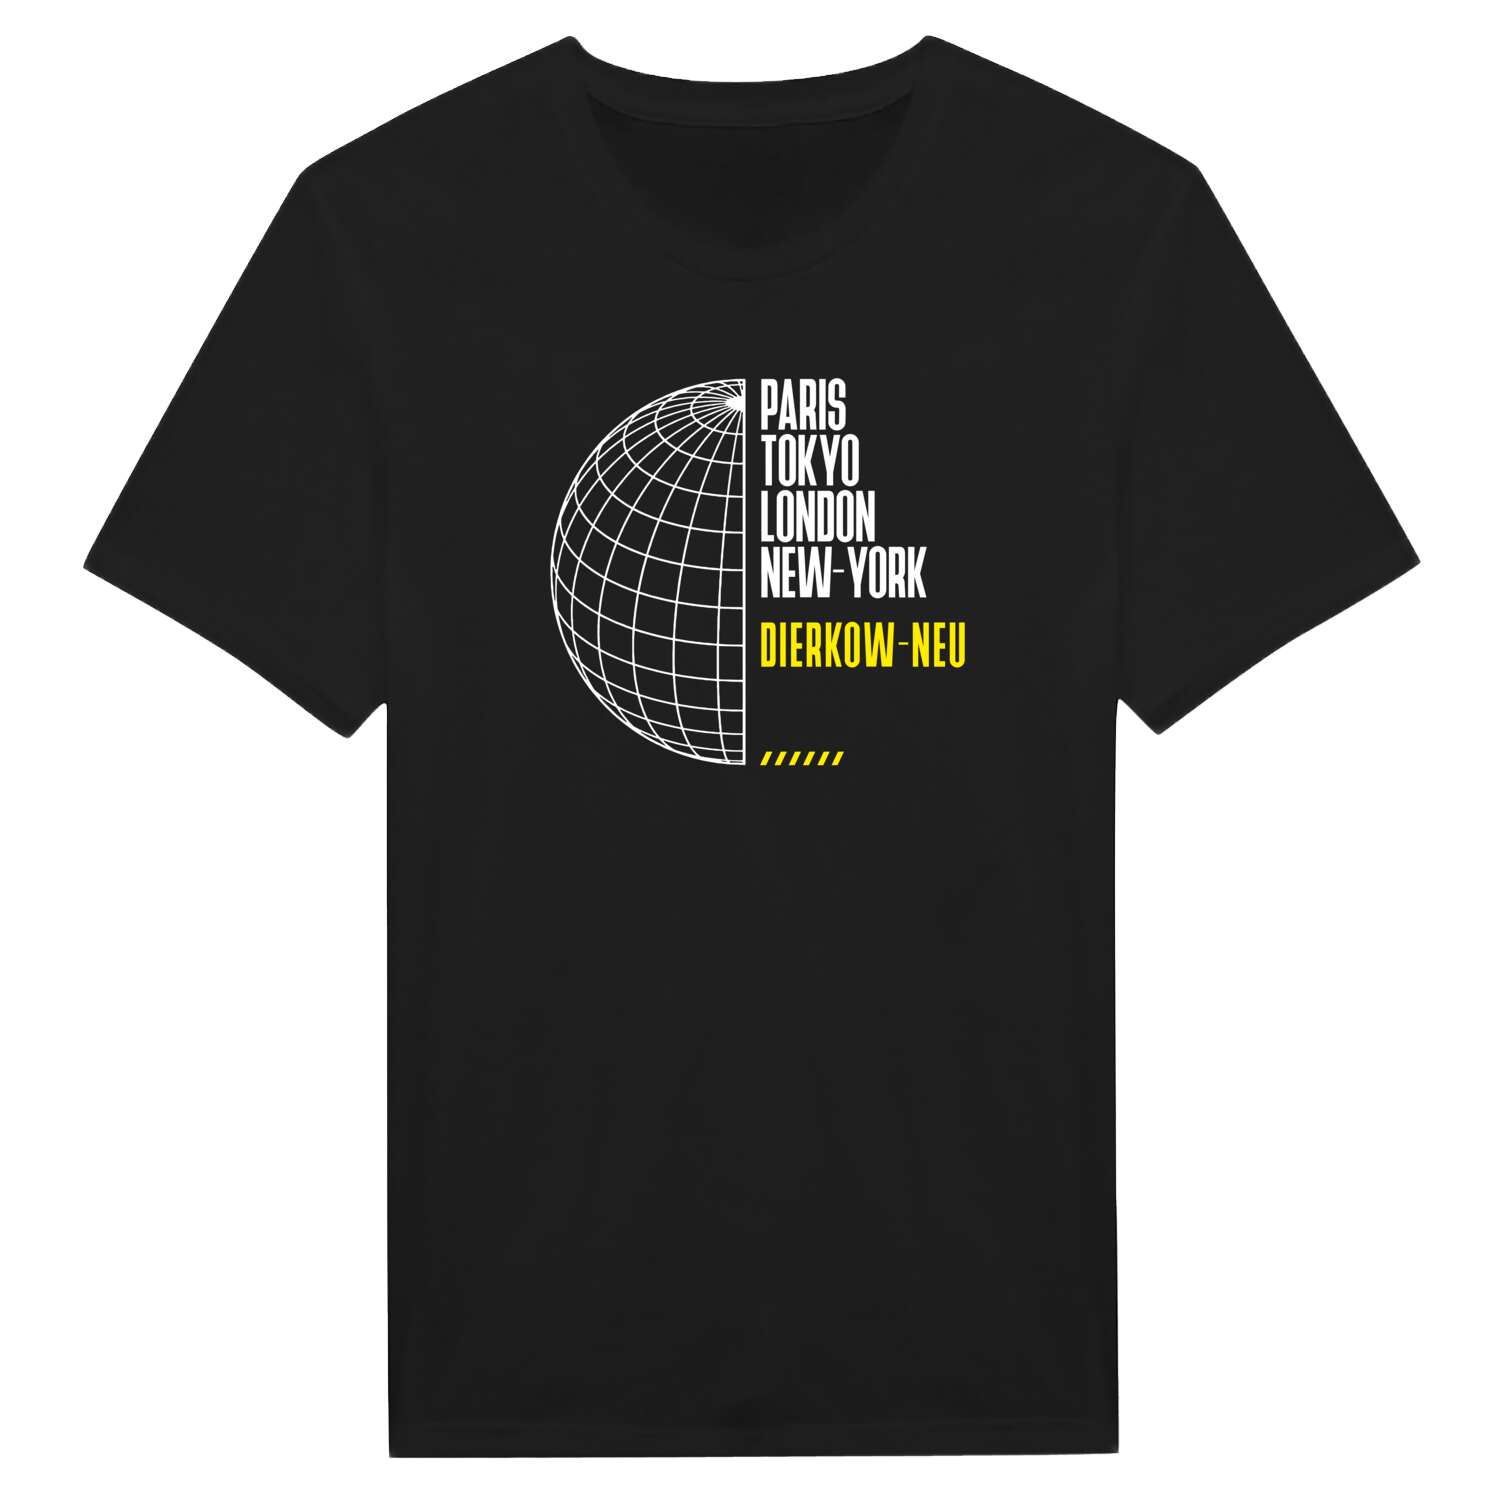 Dierkow-Neu T-Shirt »Paris Tokyo London«